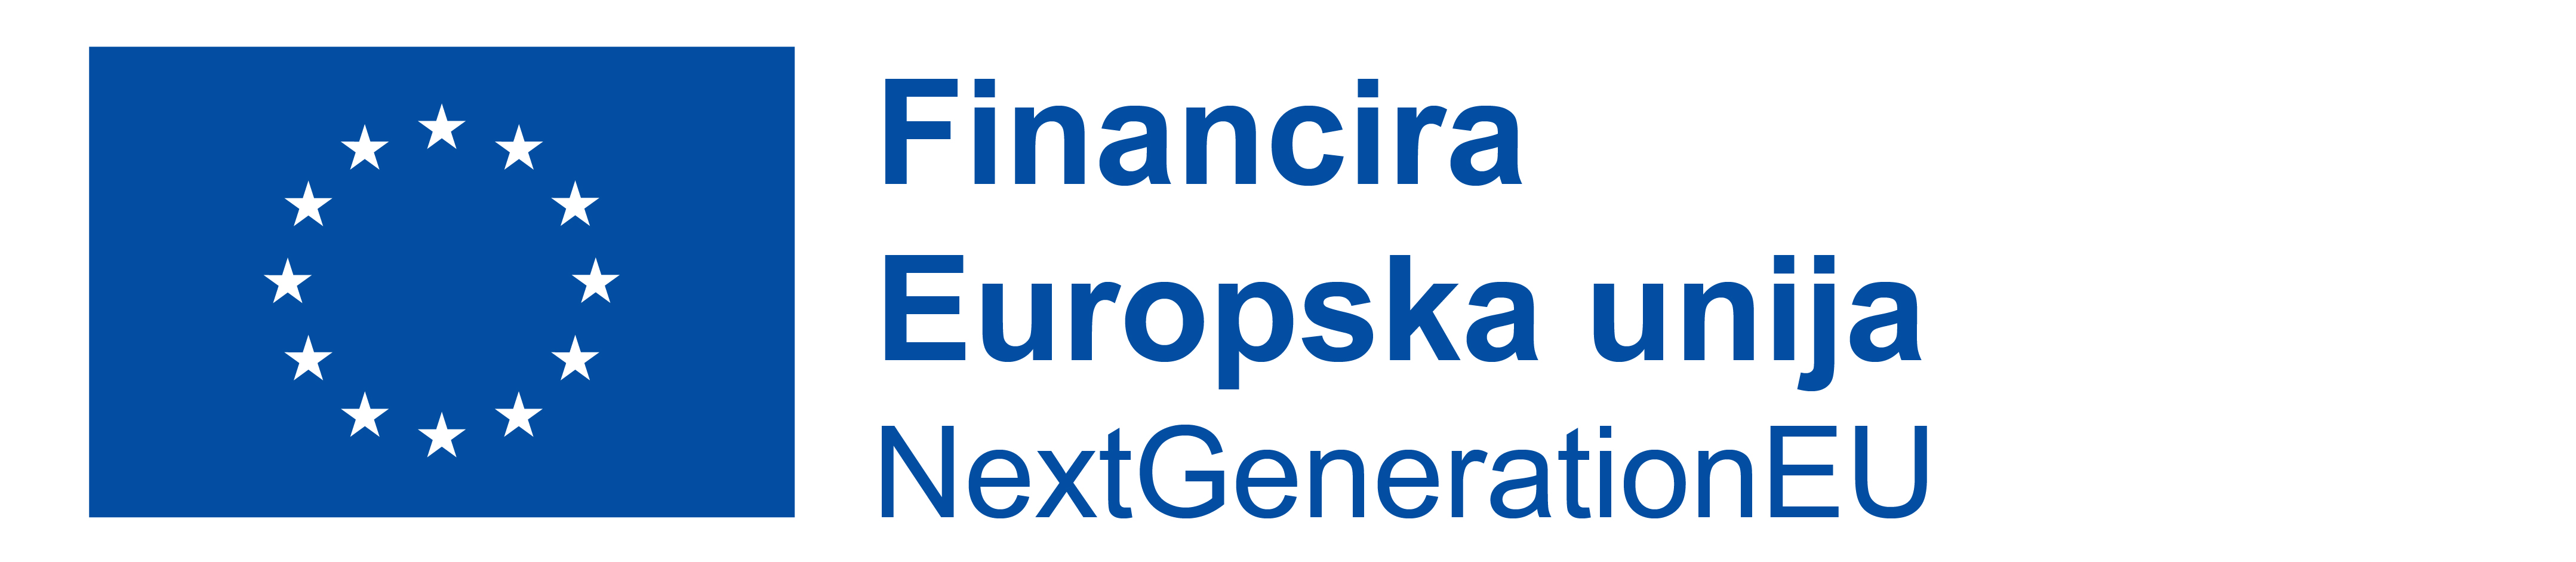 HR_Financira_Europska_unija_PANTONE.jpg